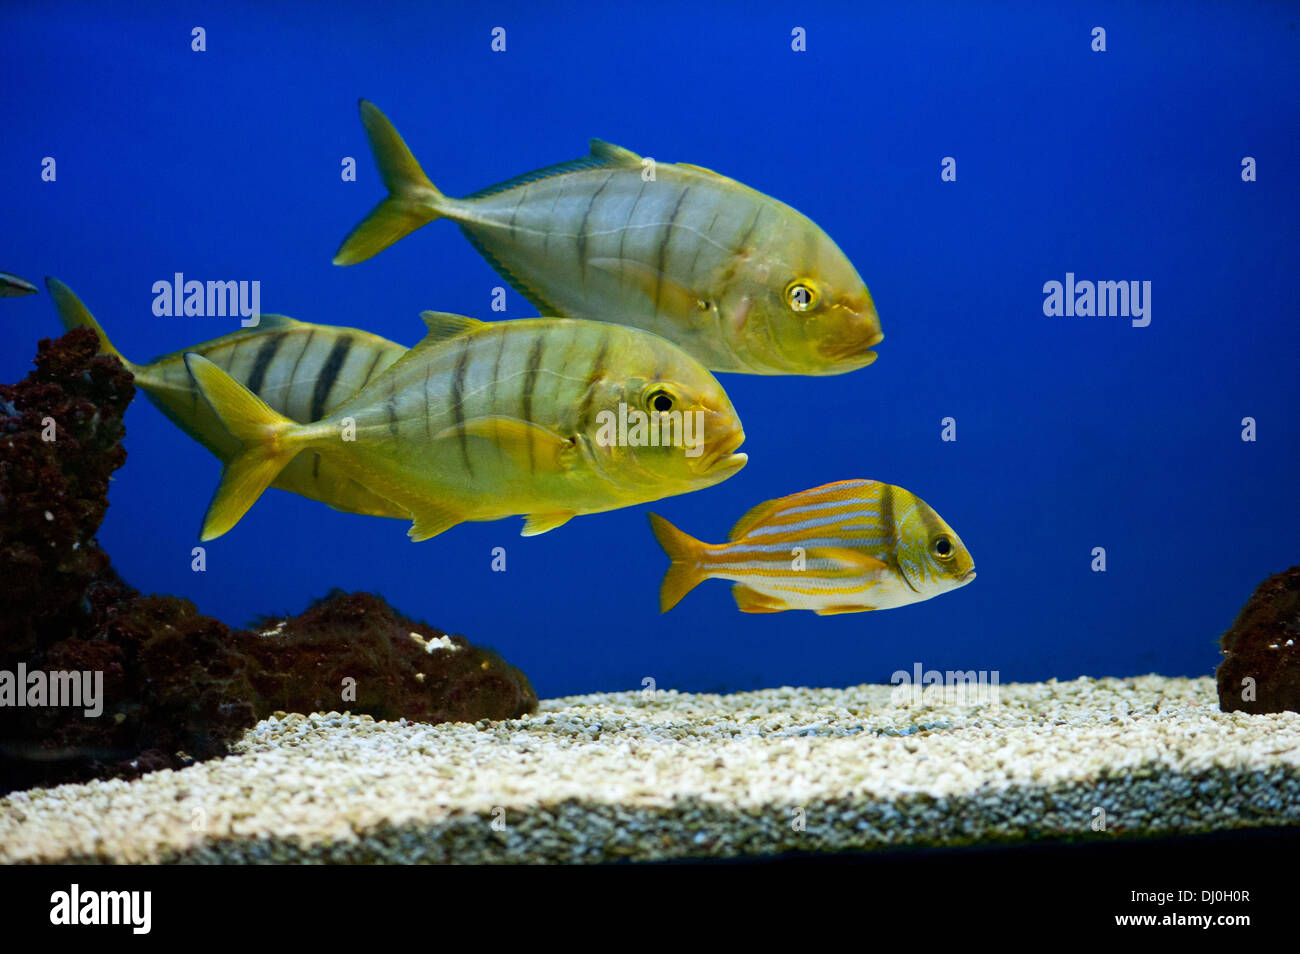 Yellow fish with black stripes (Gnathanodon speciosus) Stock Photo